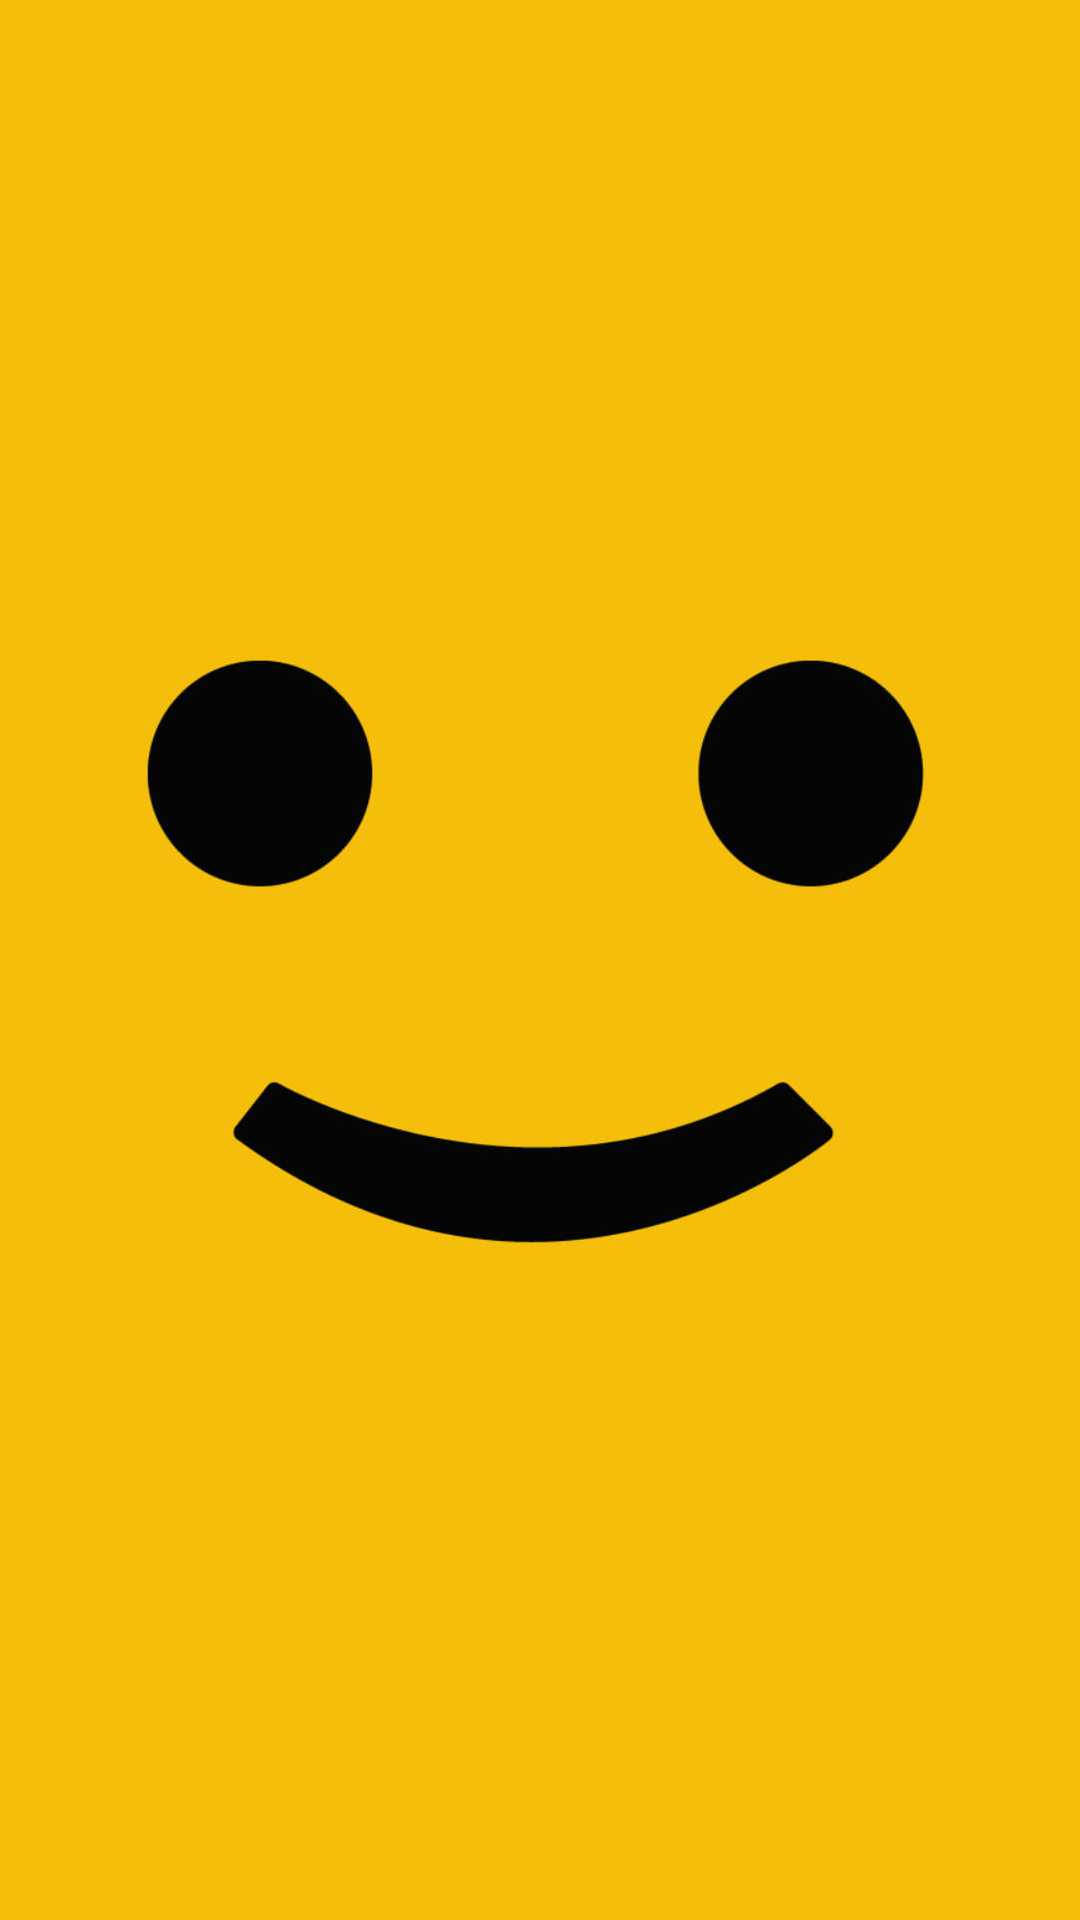 Smiley Face Minimalist Yellow